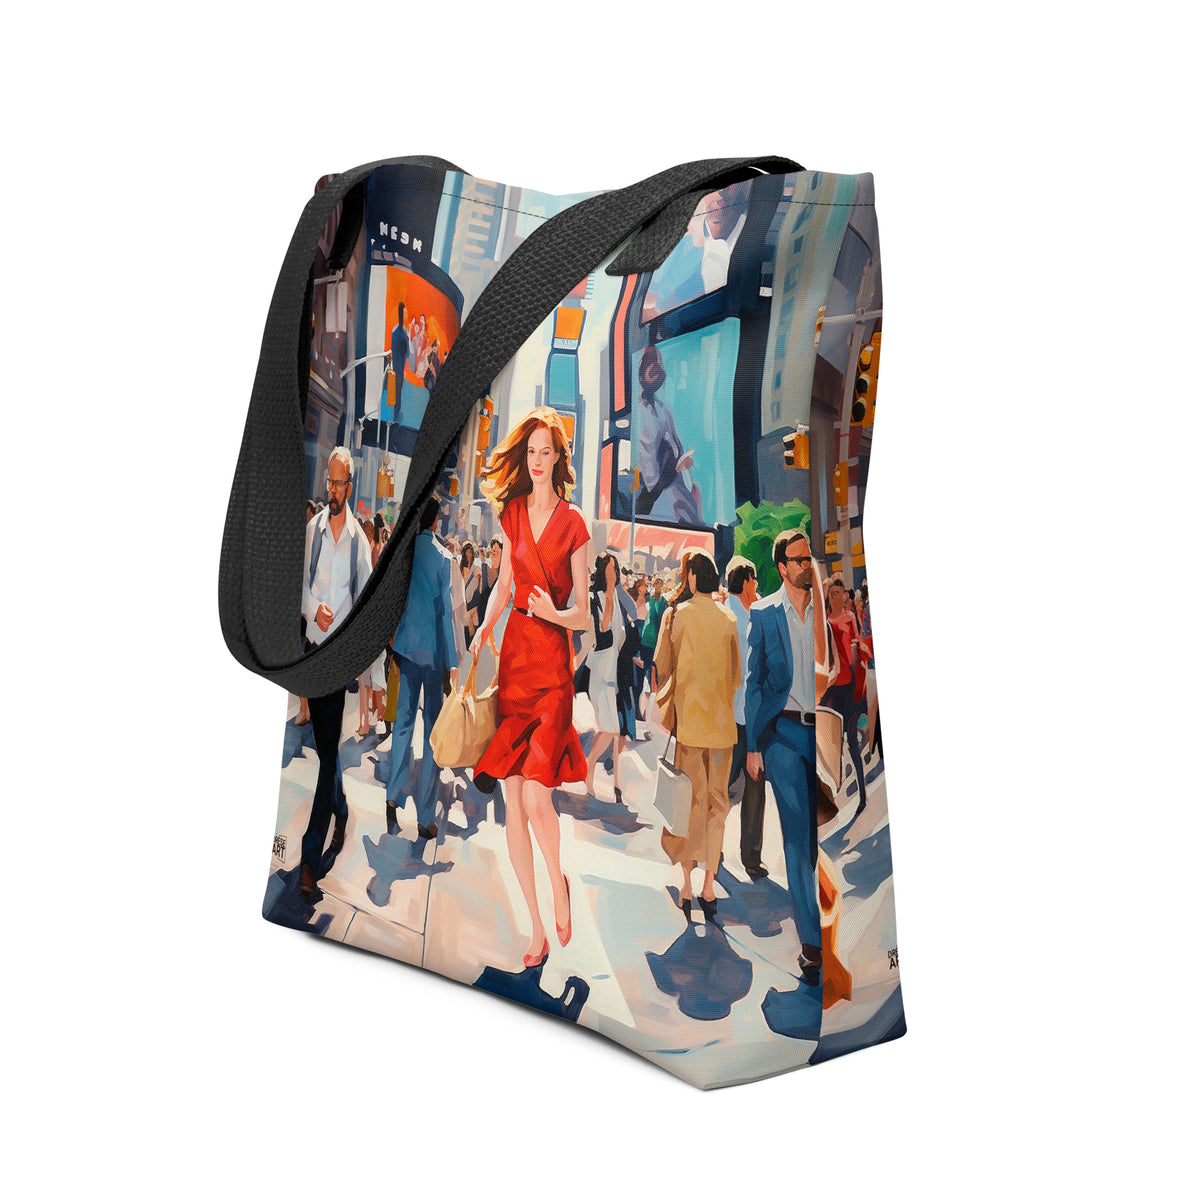 Tote Bag - New York Frenzy | Drese Art